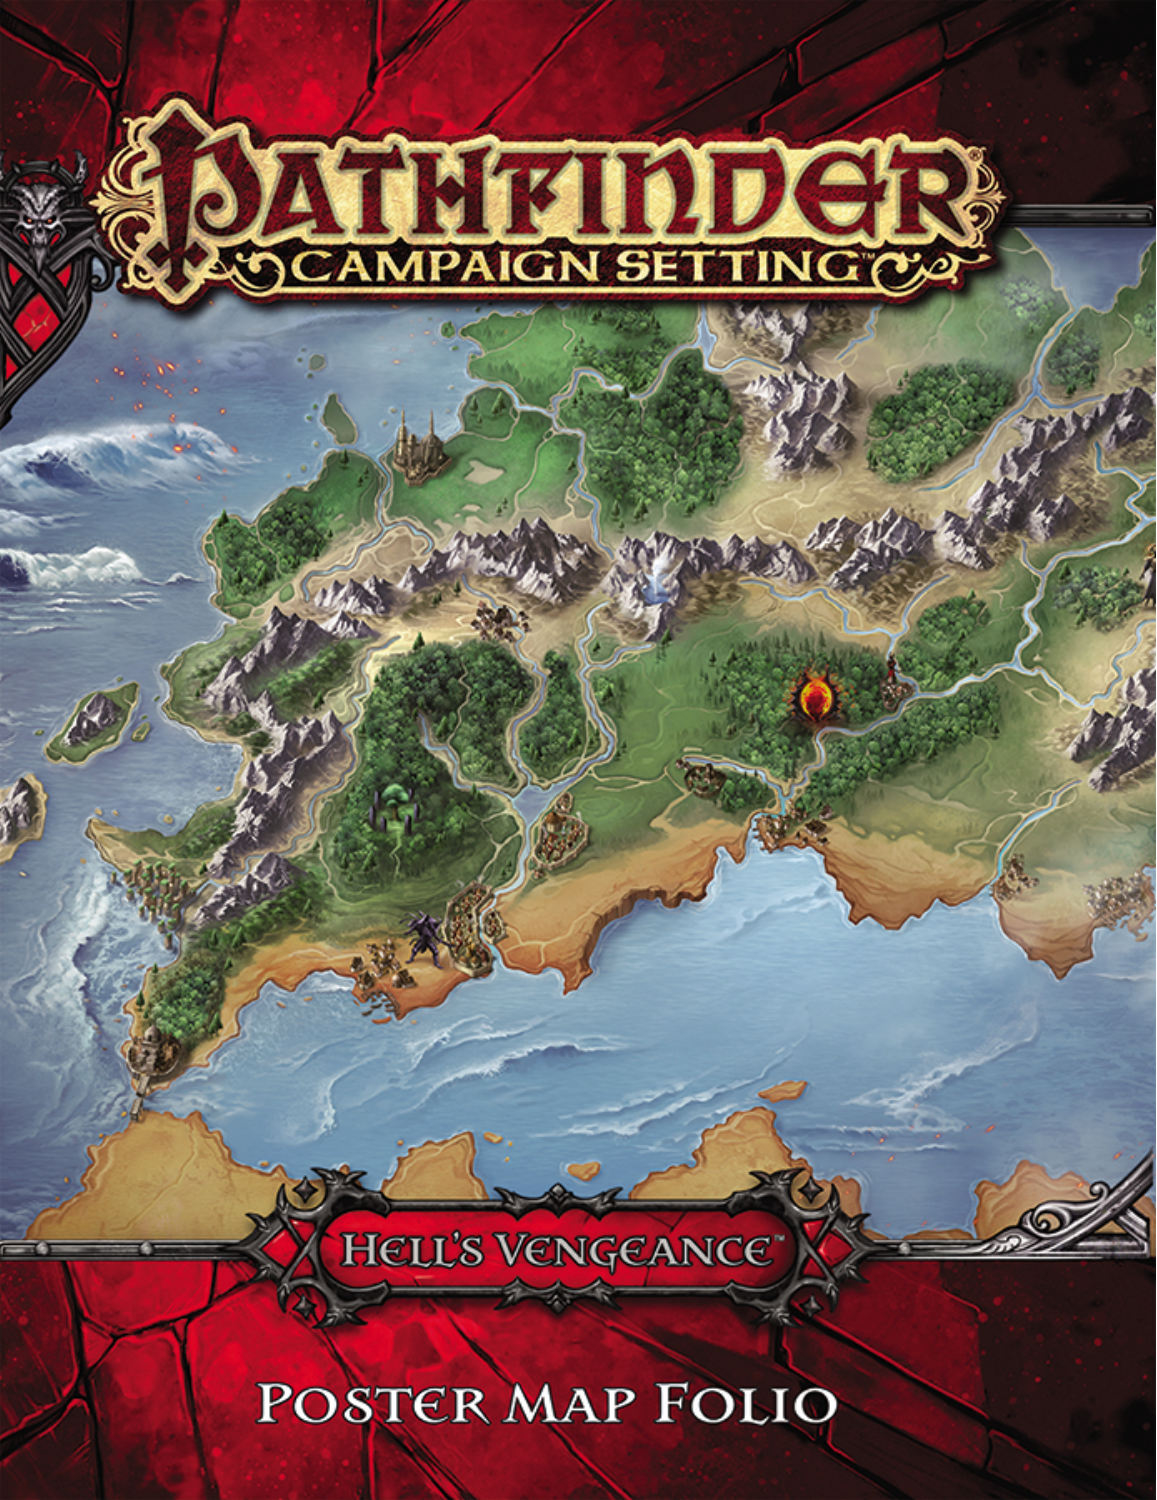 May163101 Pathfinder Setting Hells Vengeance Poster Map Folio